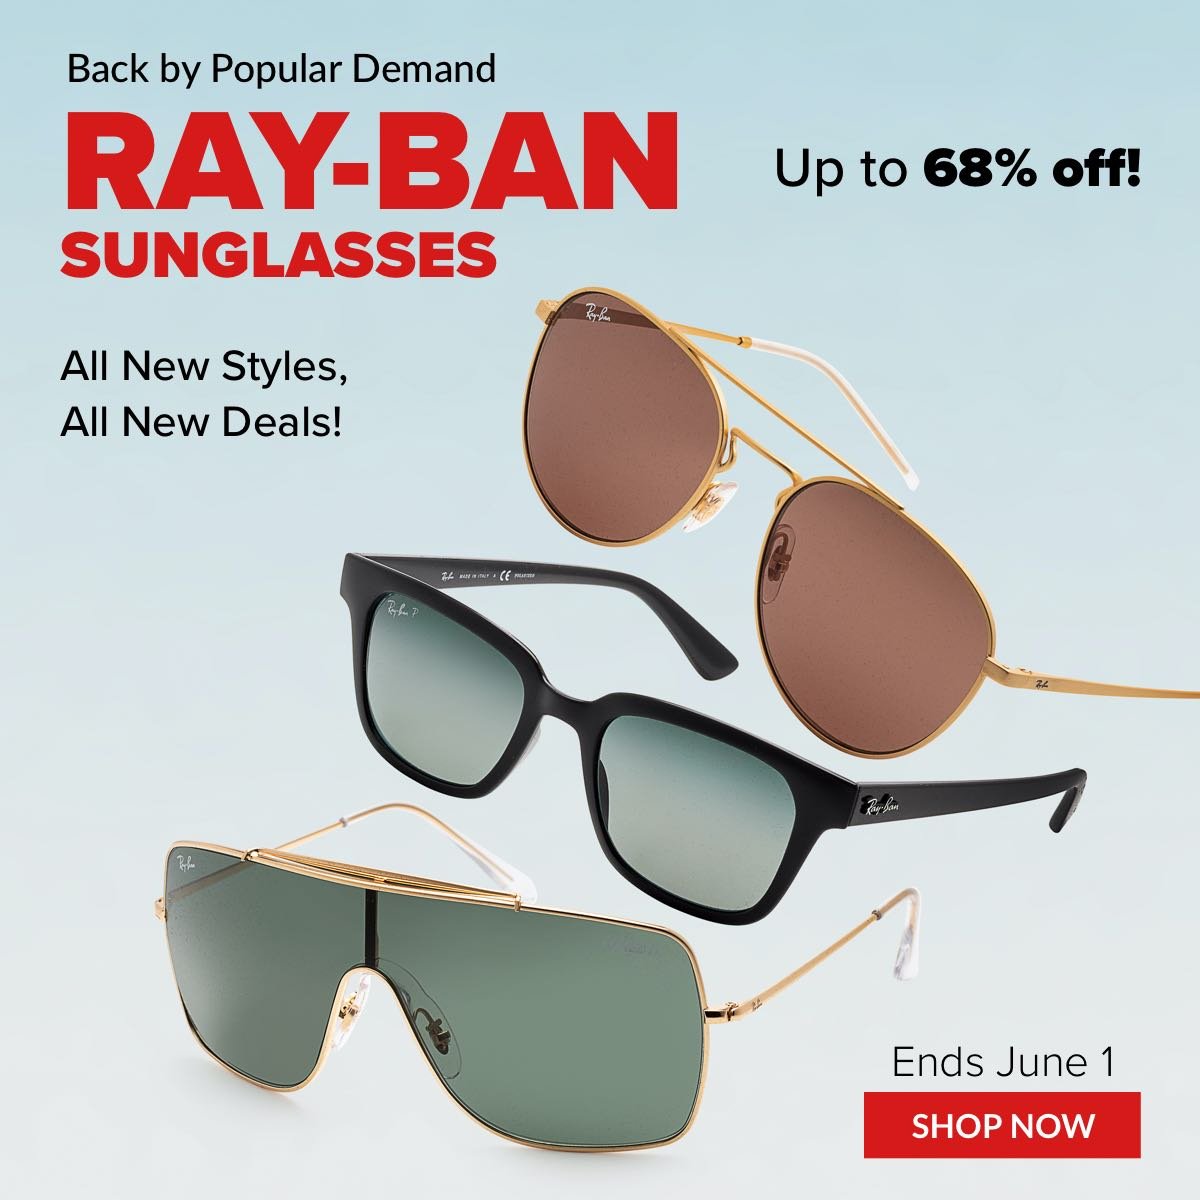 ray ban deals